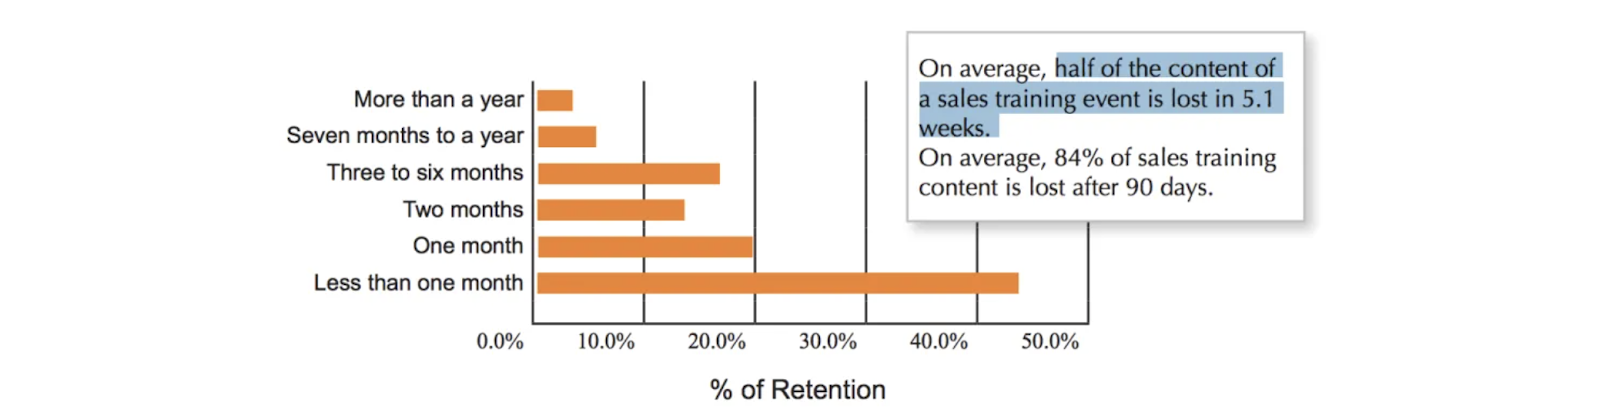 Employee retention graph